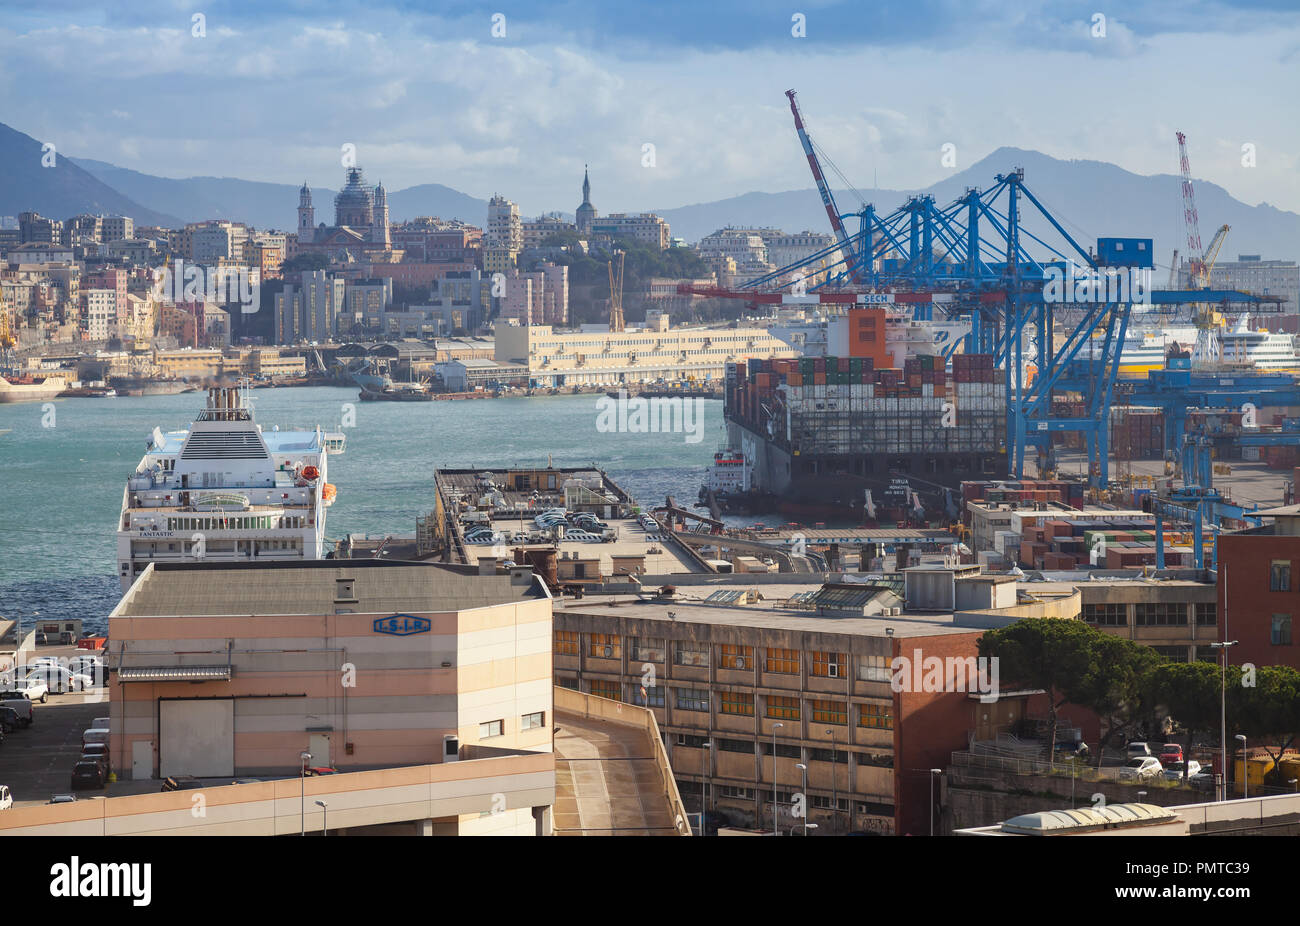 Genova, Italy - January 18, 2018: Genova port view with moored ferry and blue gantry cranes Stock Photo